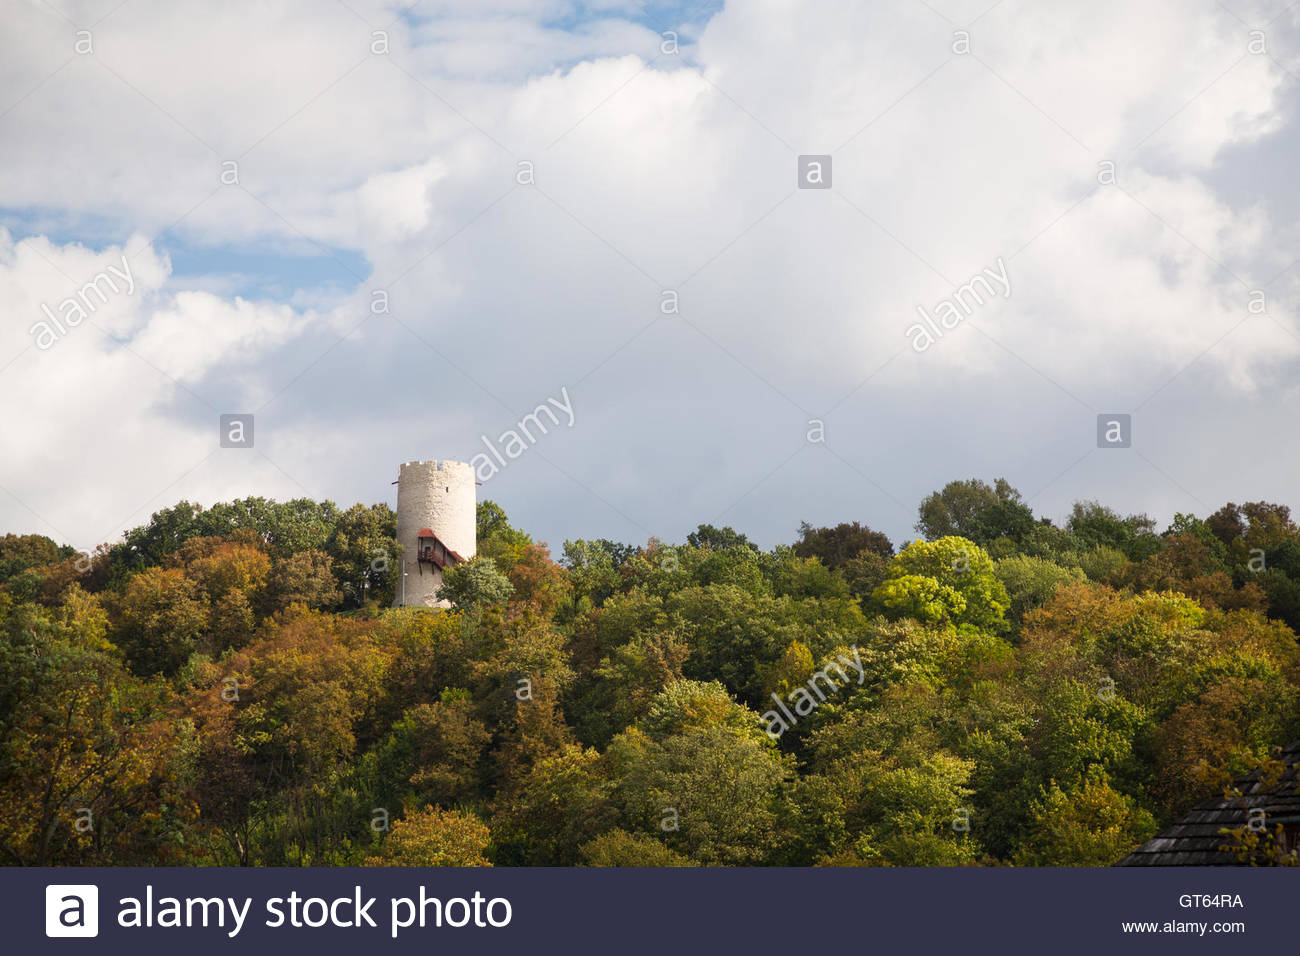 Images of Kazimierz Dolny Castle | 1300x956